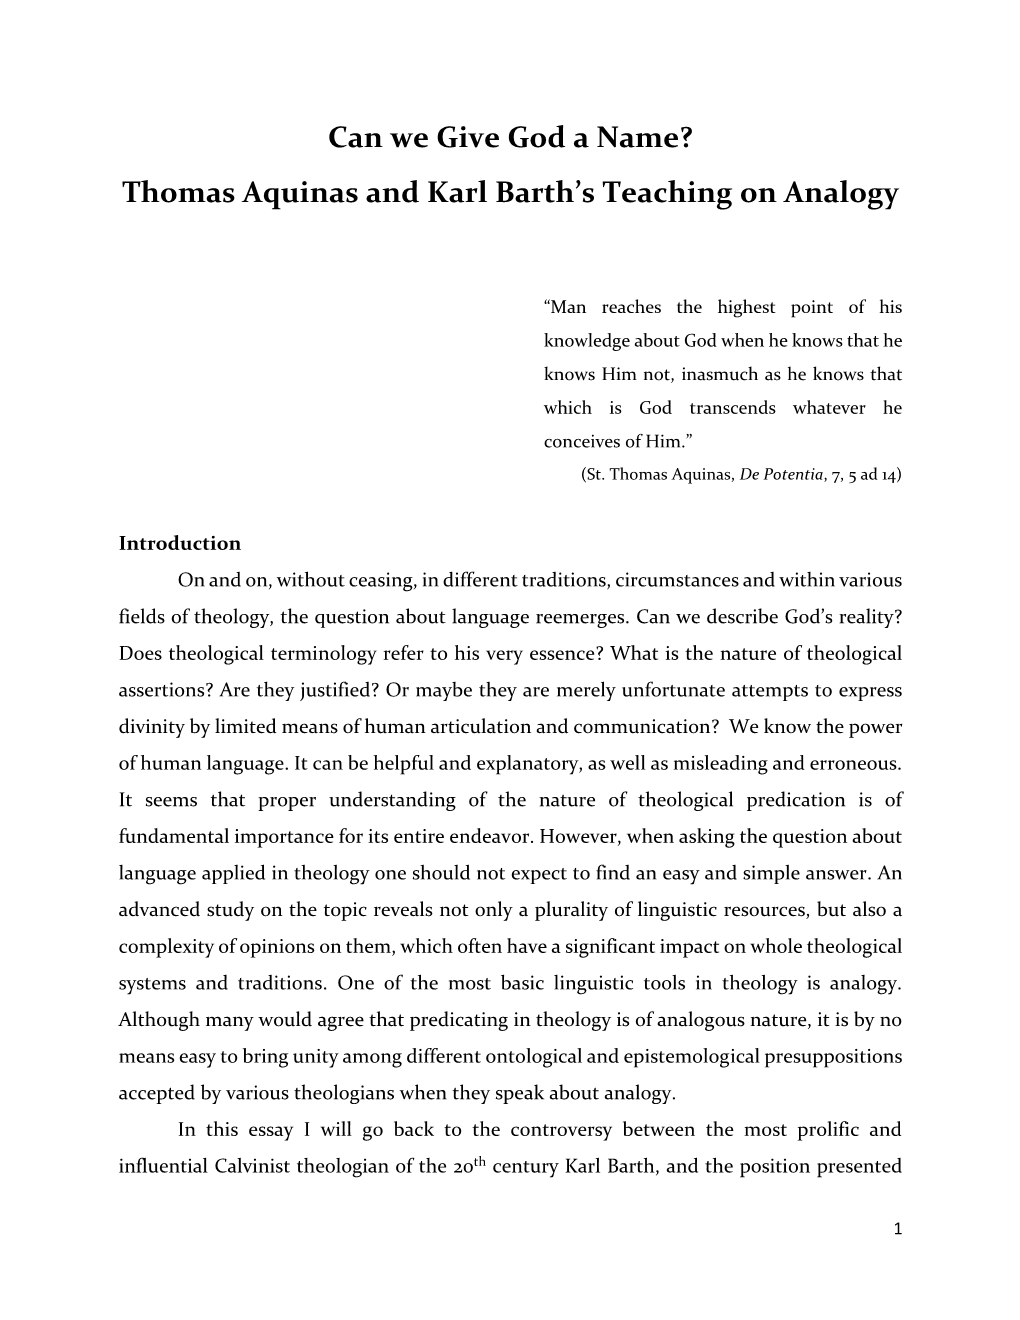 Thomas Aquinas and Karl Barth's Teaching on Analogy